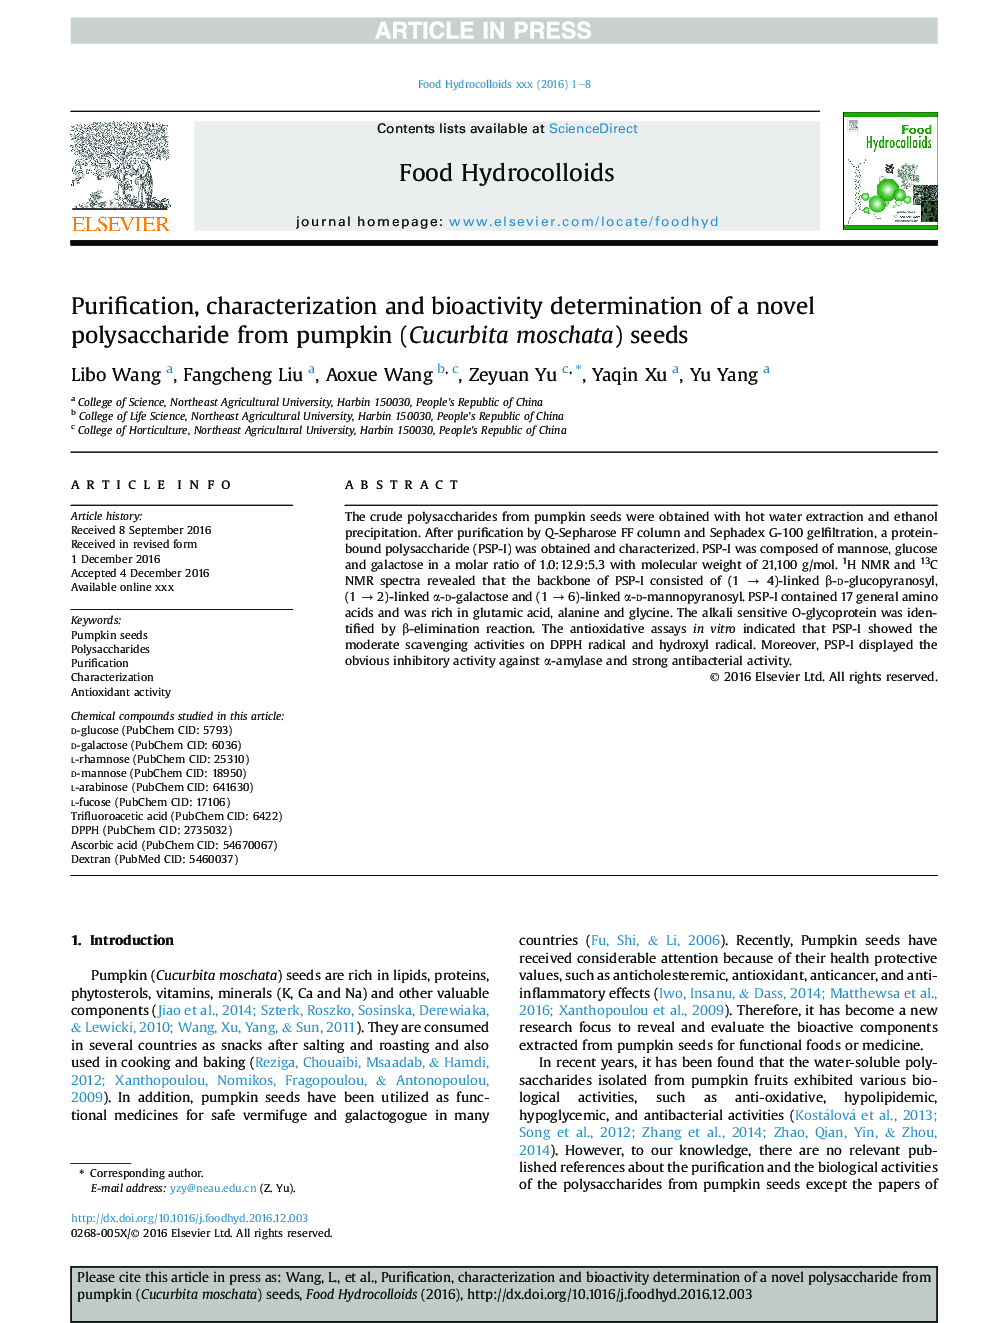 Purification, characterization and bioactivity determination of a novel polysaccharide from pumpkin (Cucurbita moschata) seeds